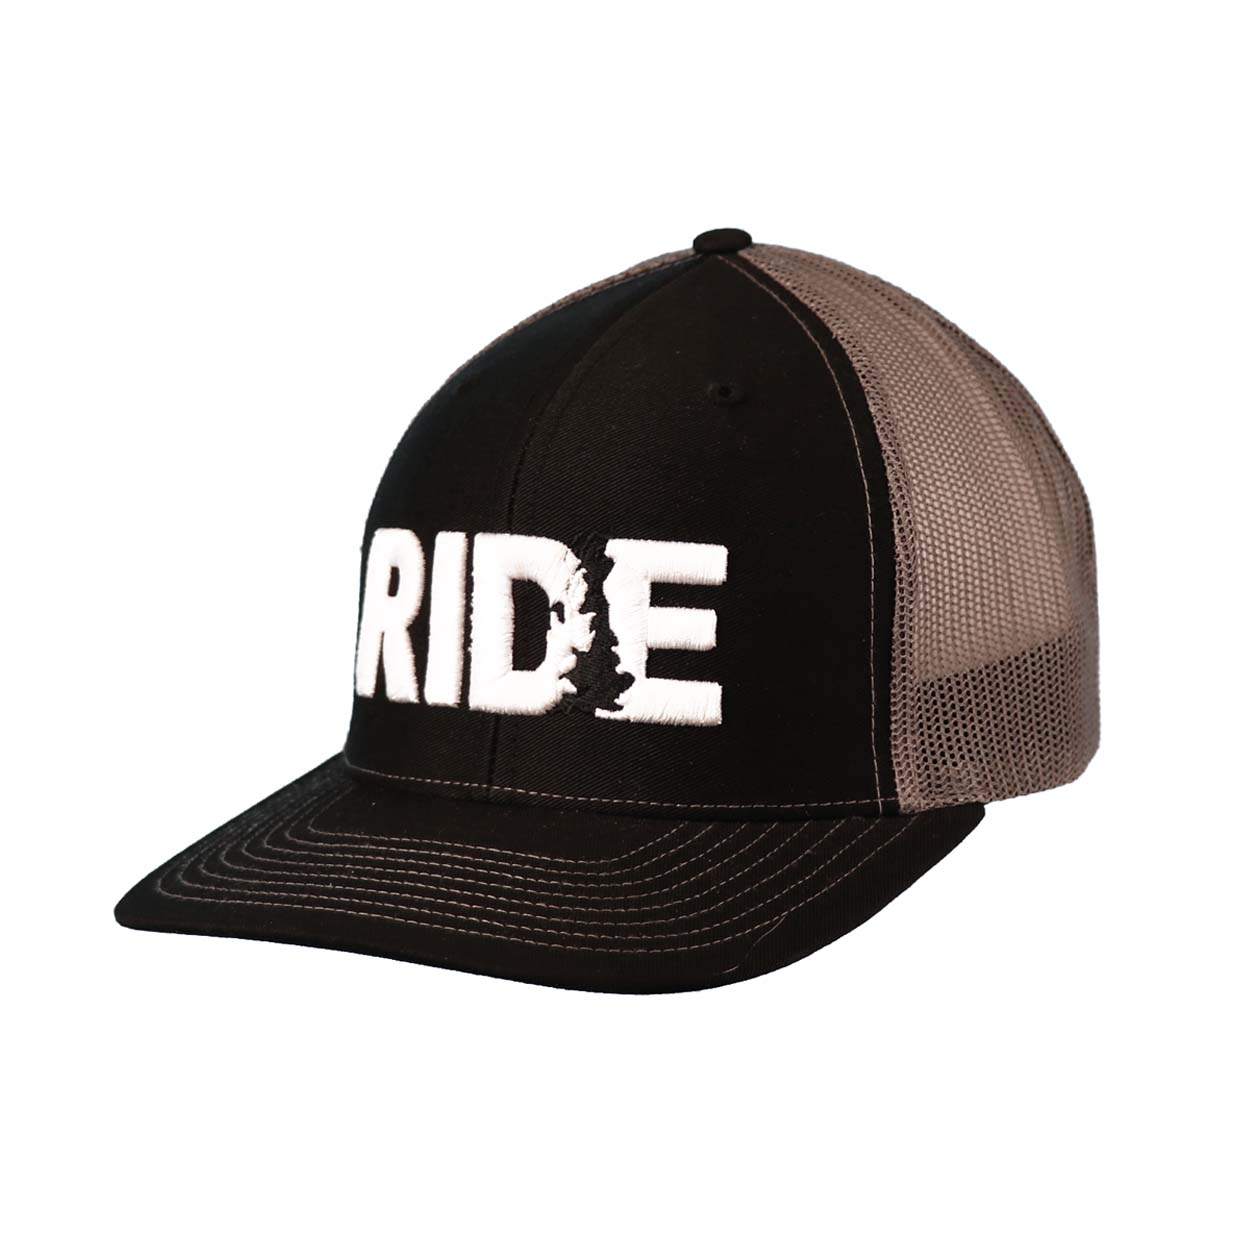 Ride United Kingdom Classic Embroidered Snapback Trucker Hat Black/Gray